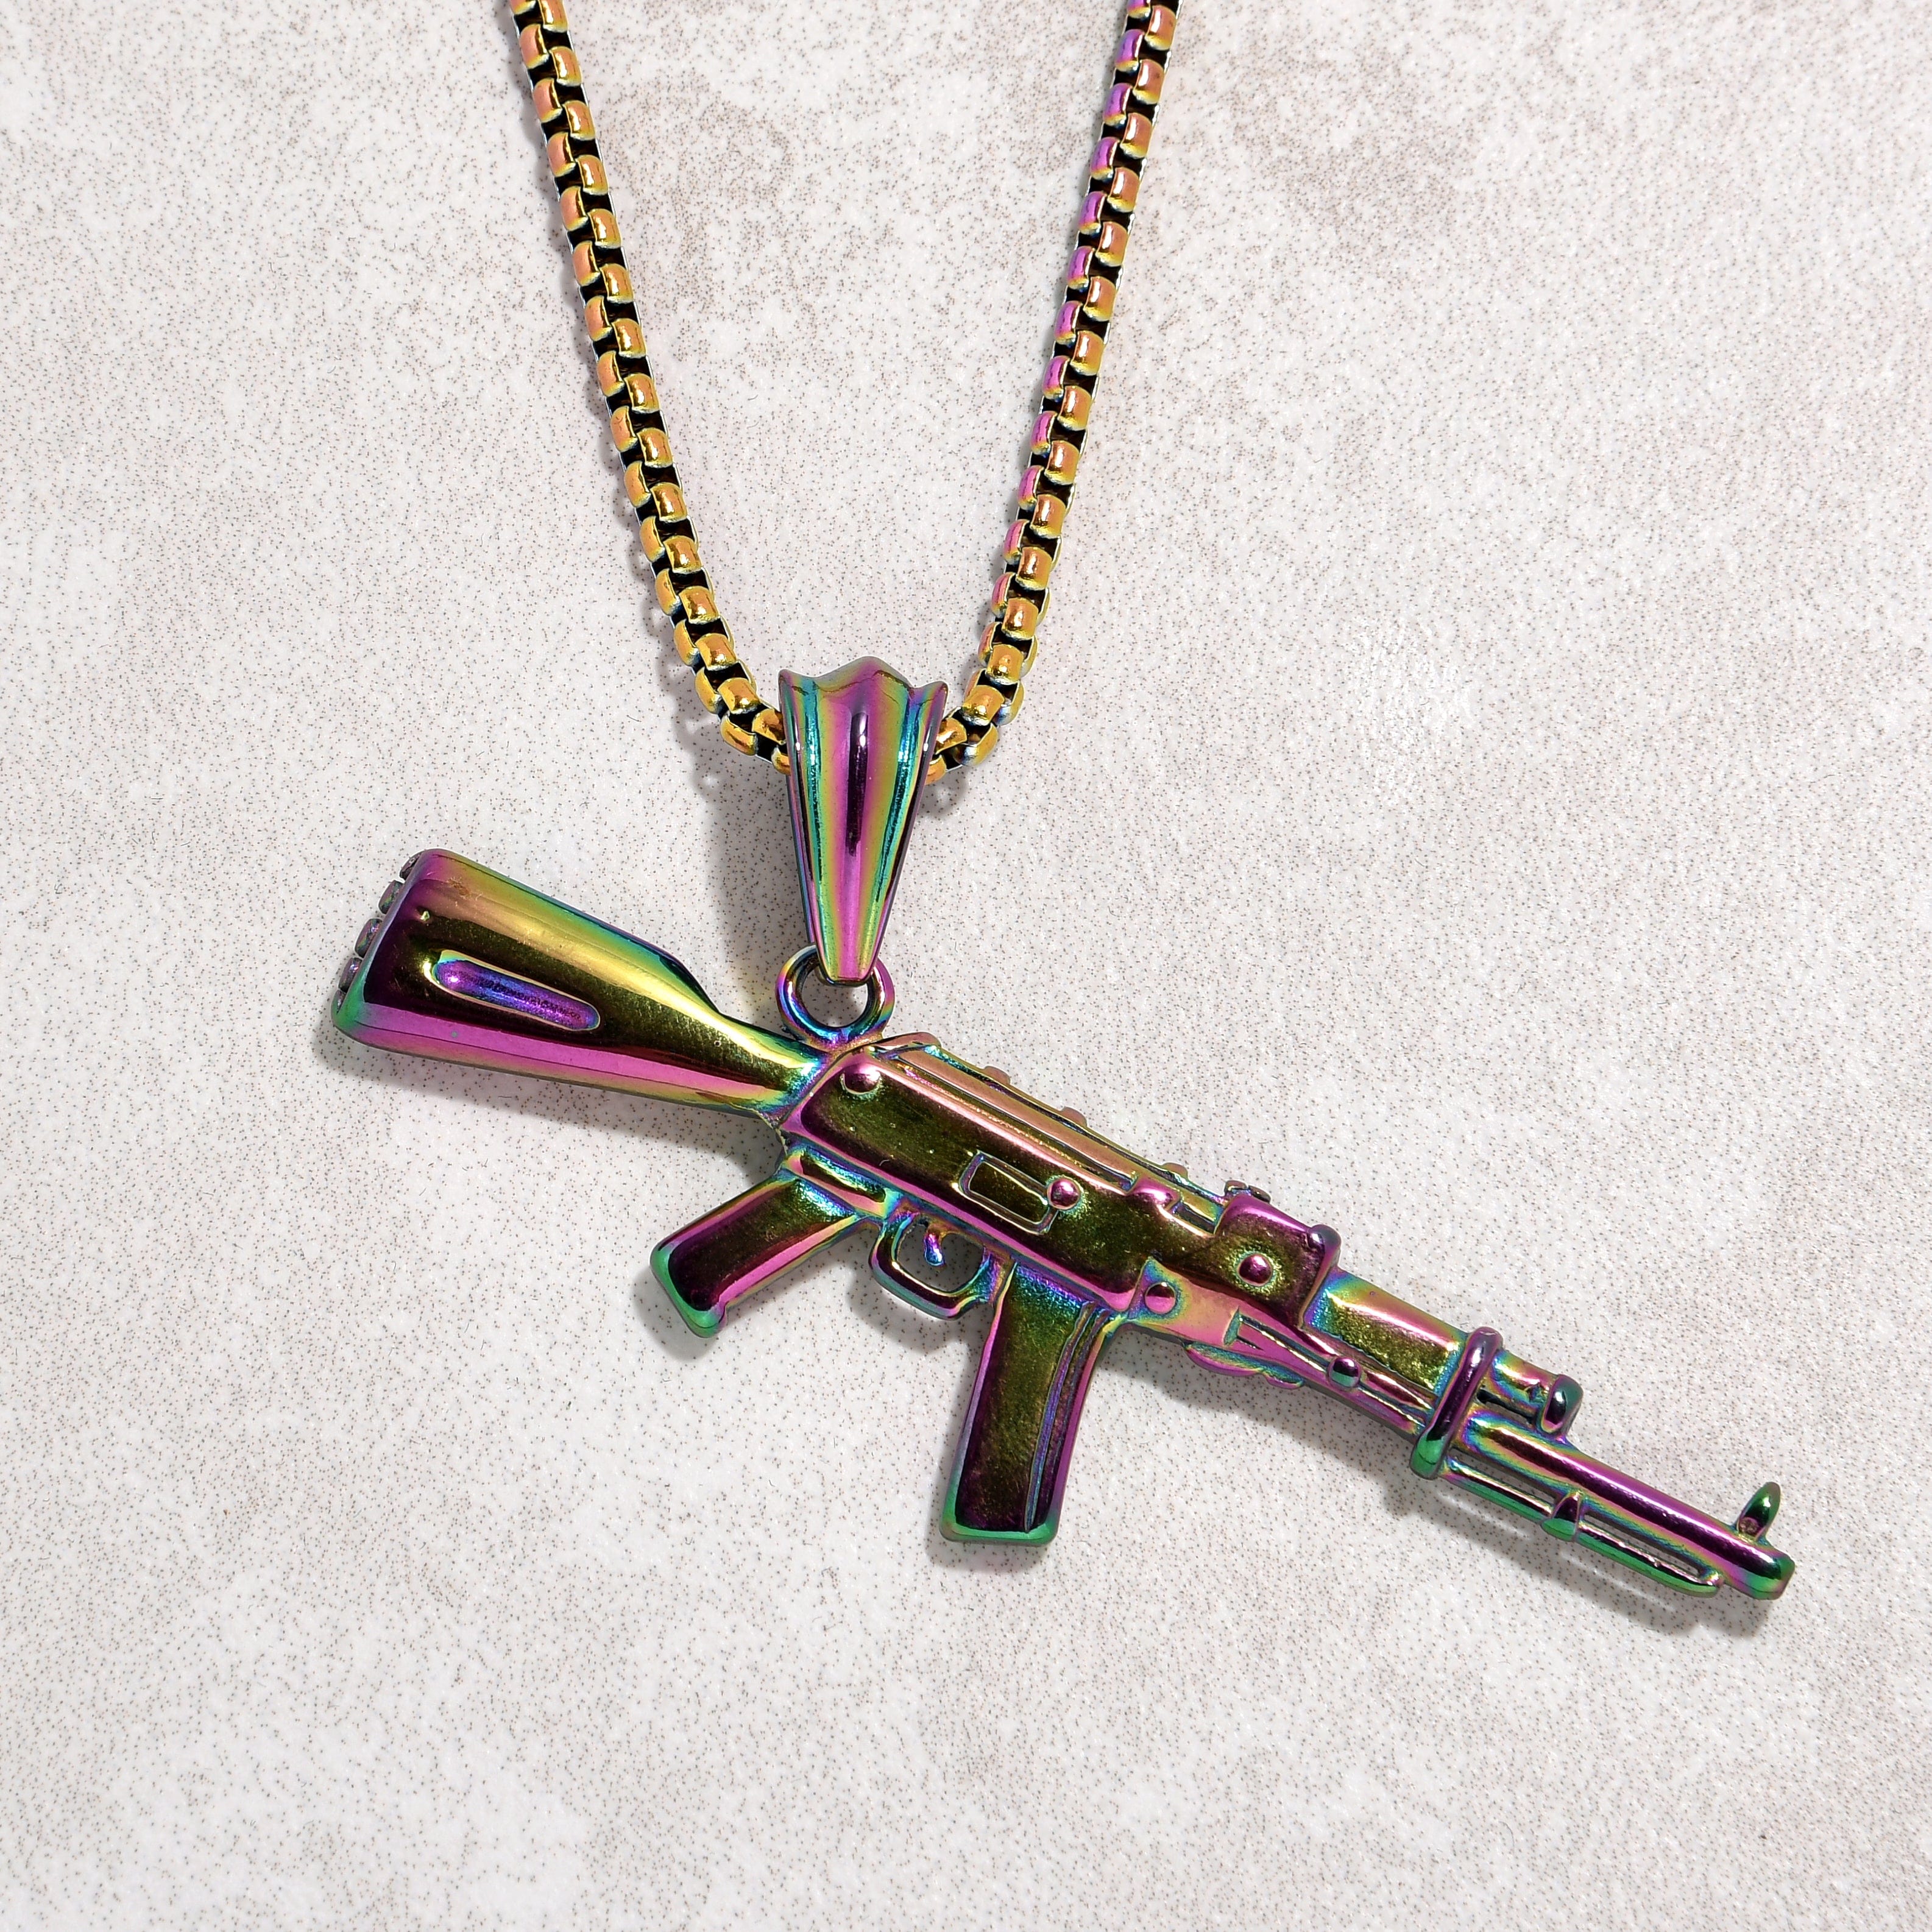 Kalifano Steel Hearts Jewelry Aurora Borealis AK-47 Gun Steel Hearts Necklace SHN518-AB